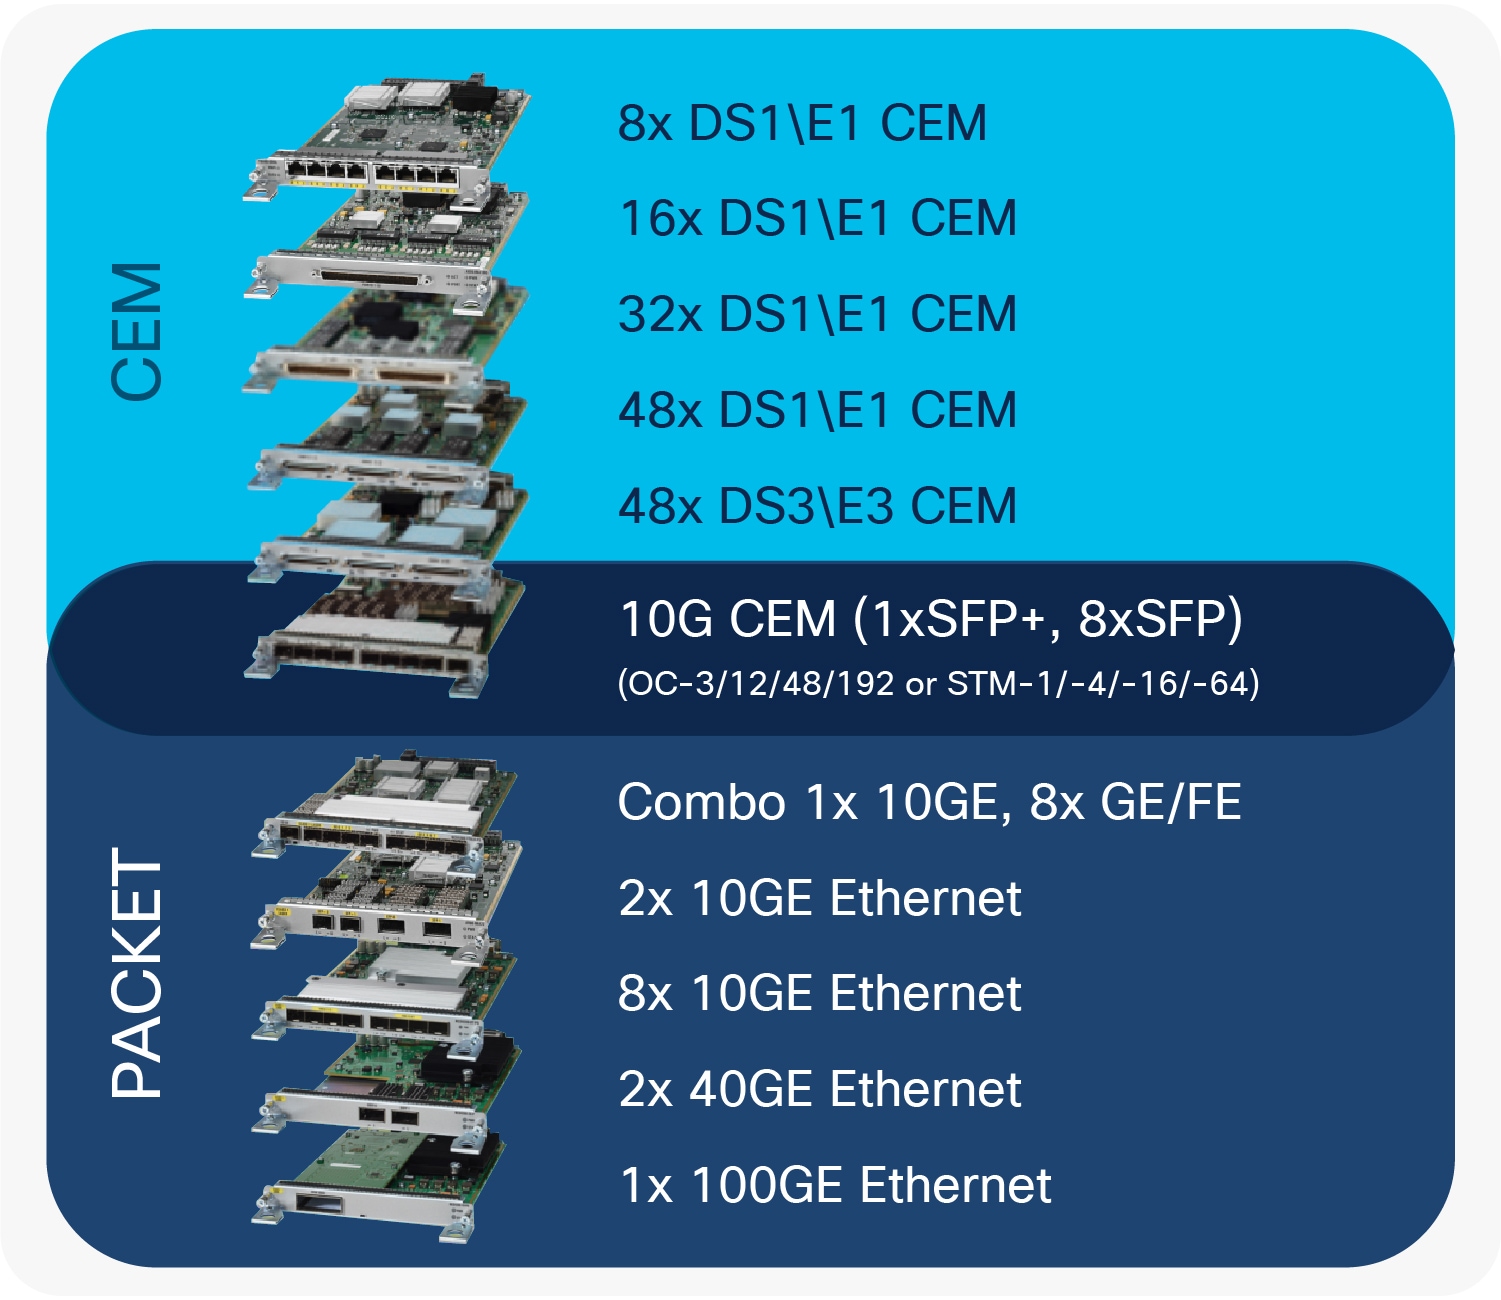 Cisco Asr 900 Series Interface Modules Data Sheet Cisco